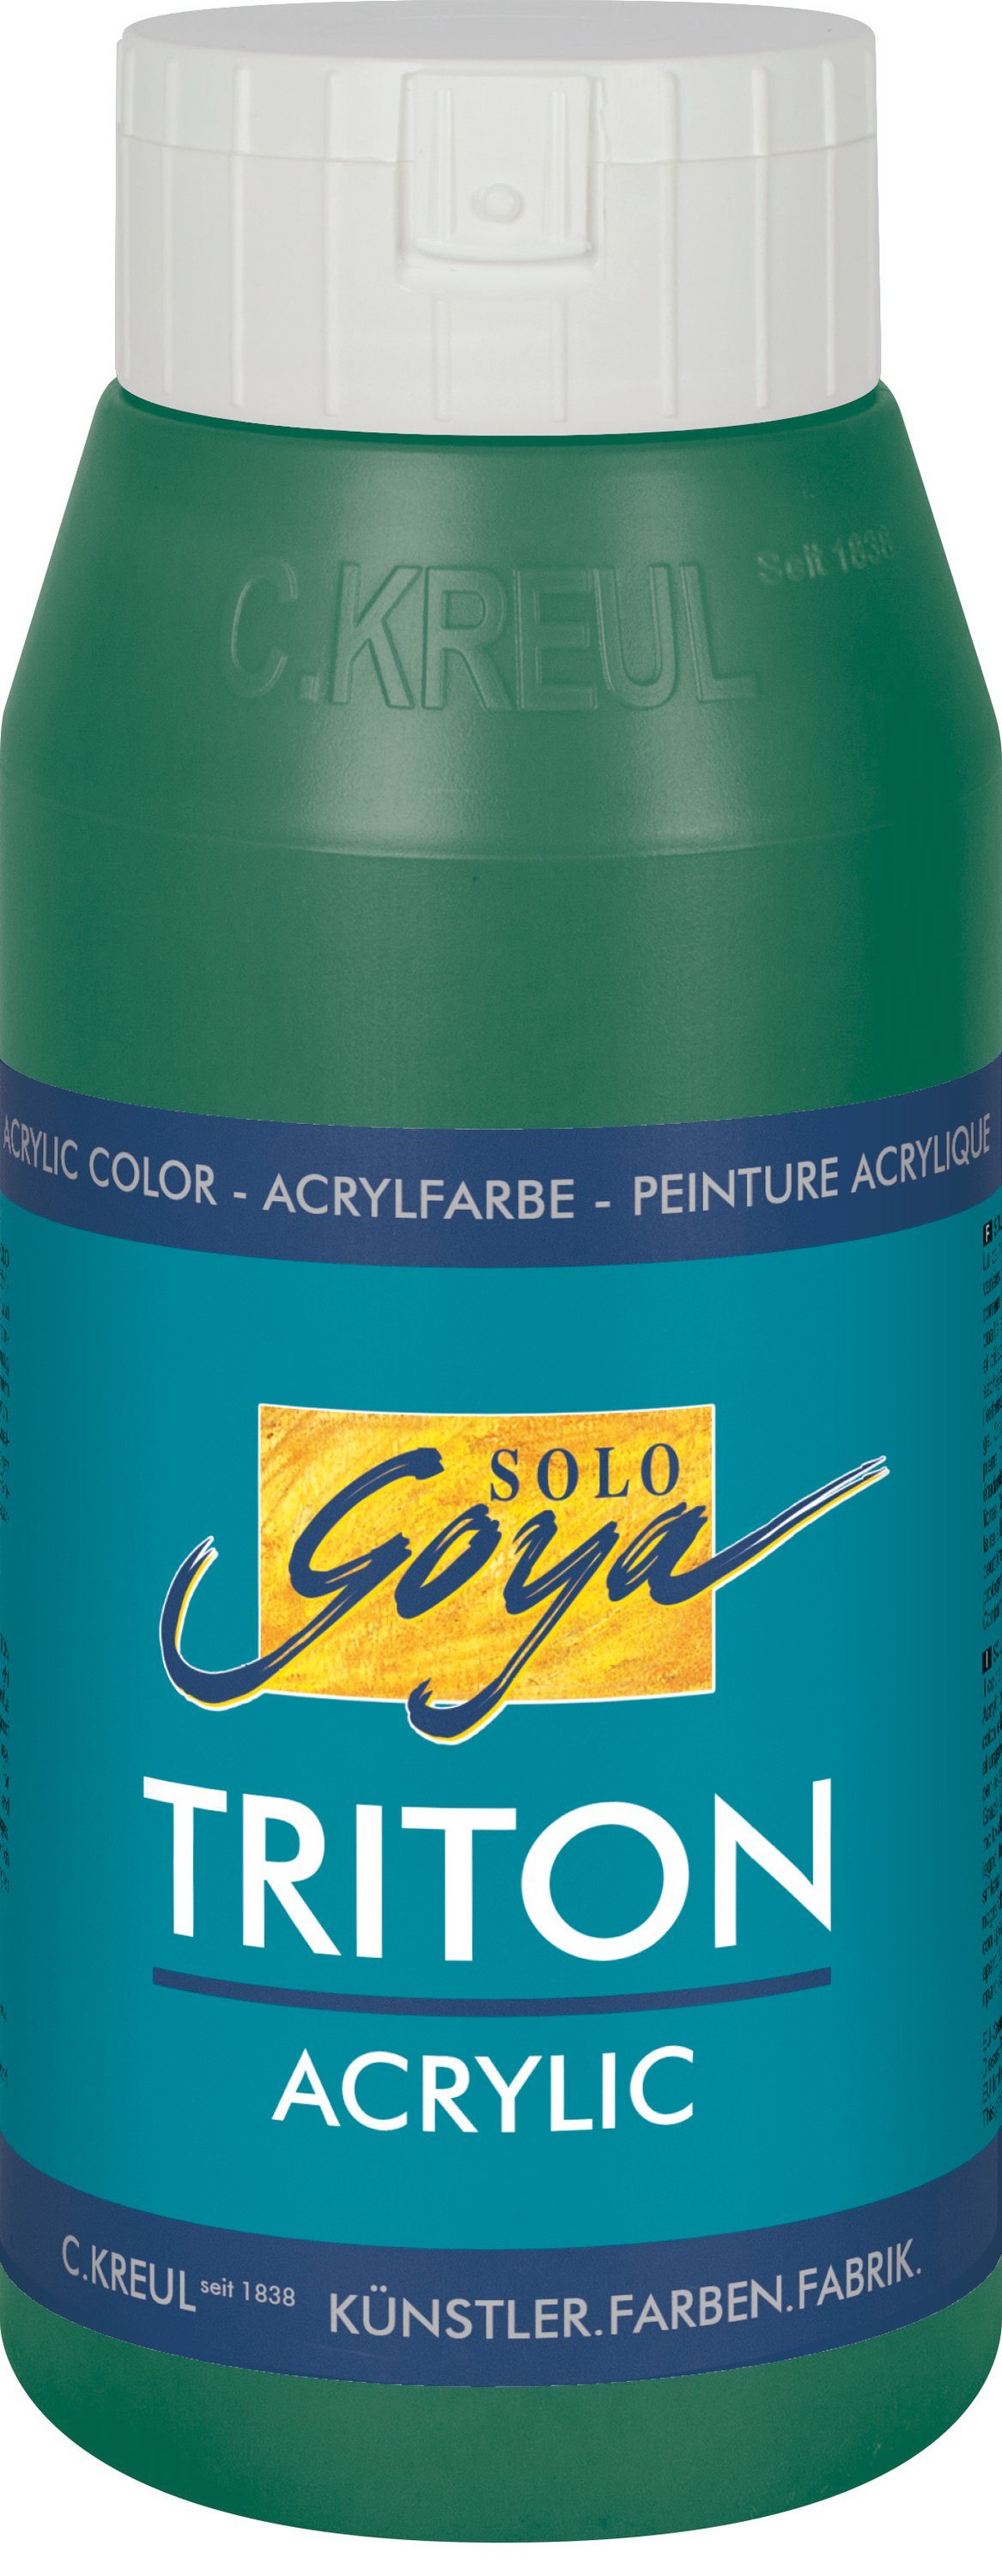 Kreul Acrylfarbe Triton Solo Acrylic, Goya Dunkelgrün 750 ml